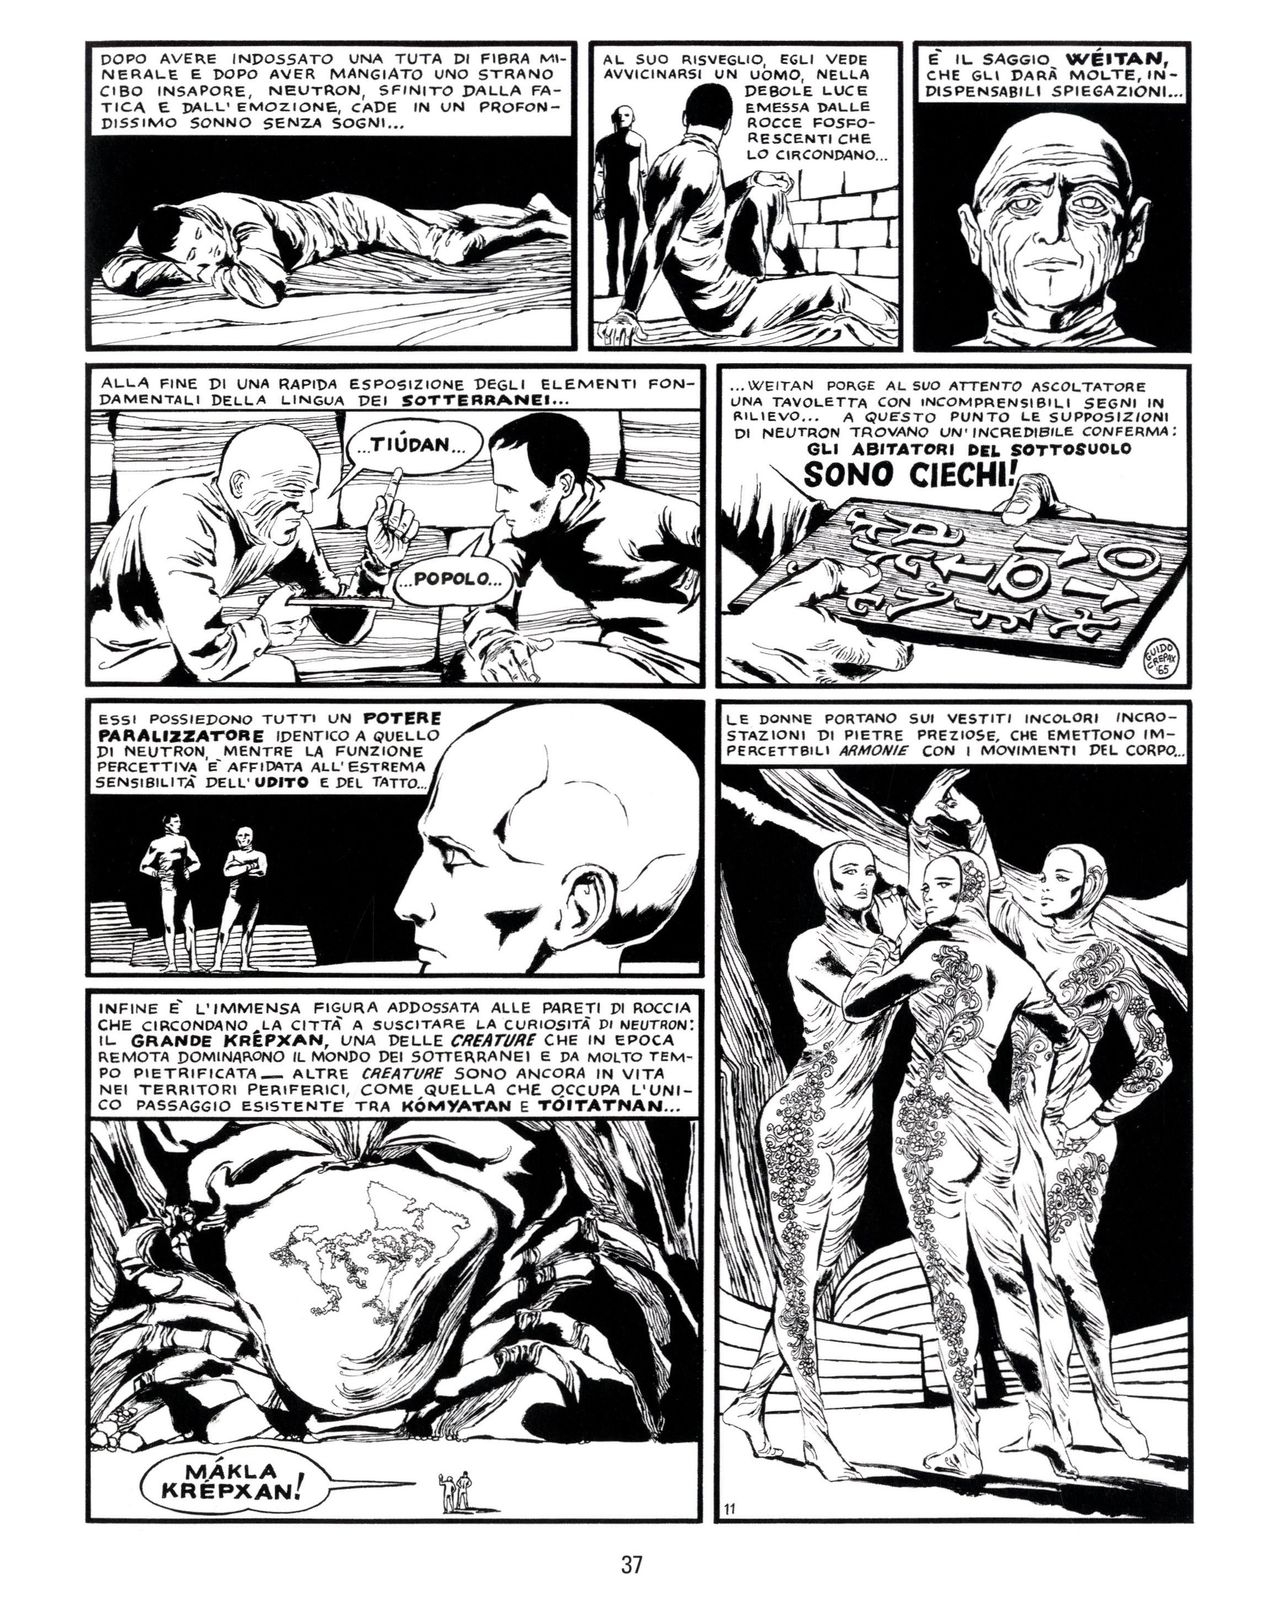 [Guido Crepax] Erotica Fumetti #25 : L'ascesa dei sotterranei : I cavalieri ciechi [Italian] 38